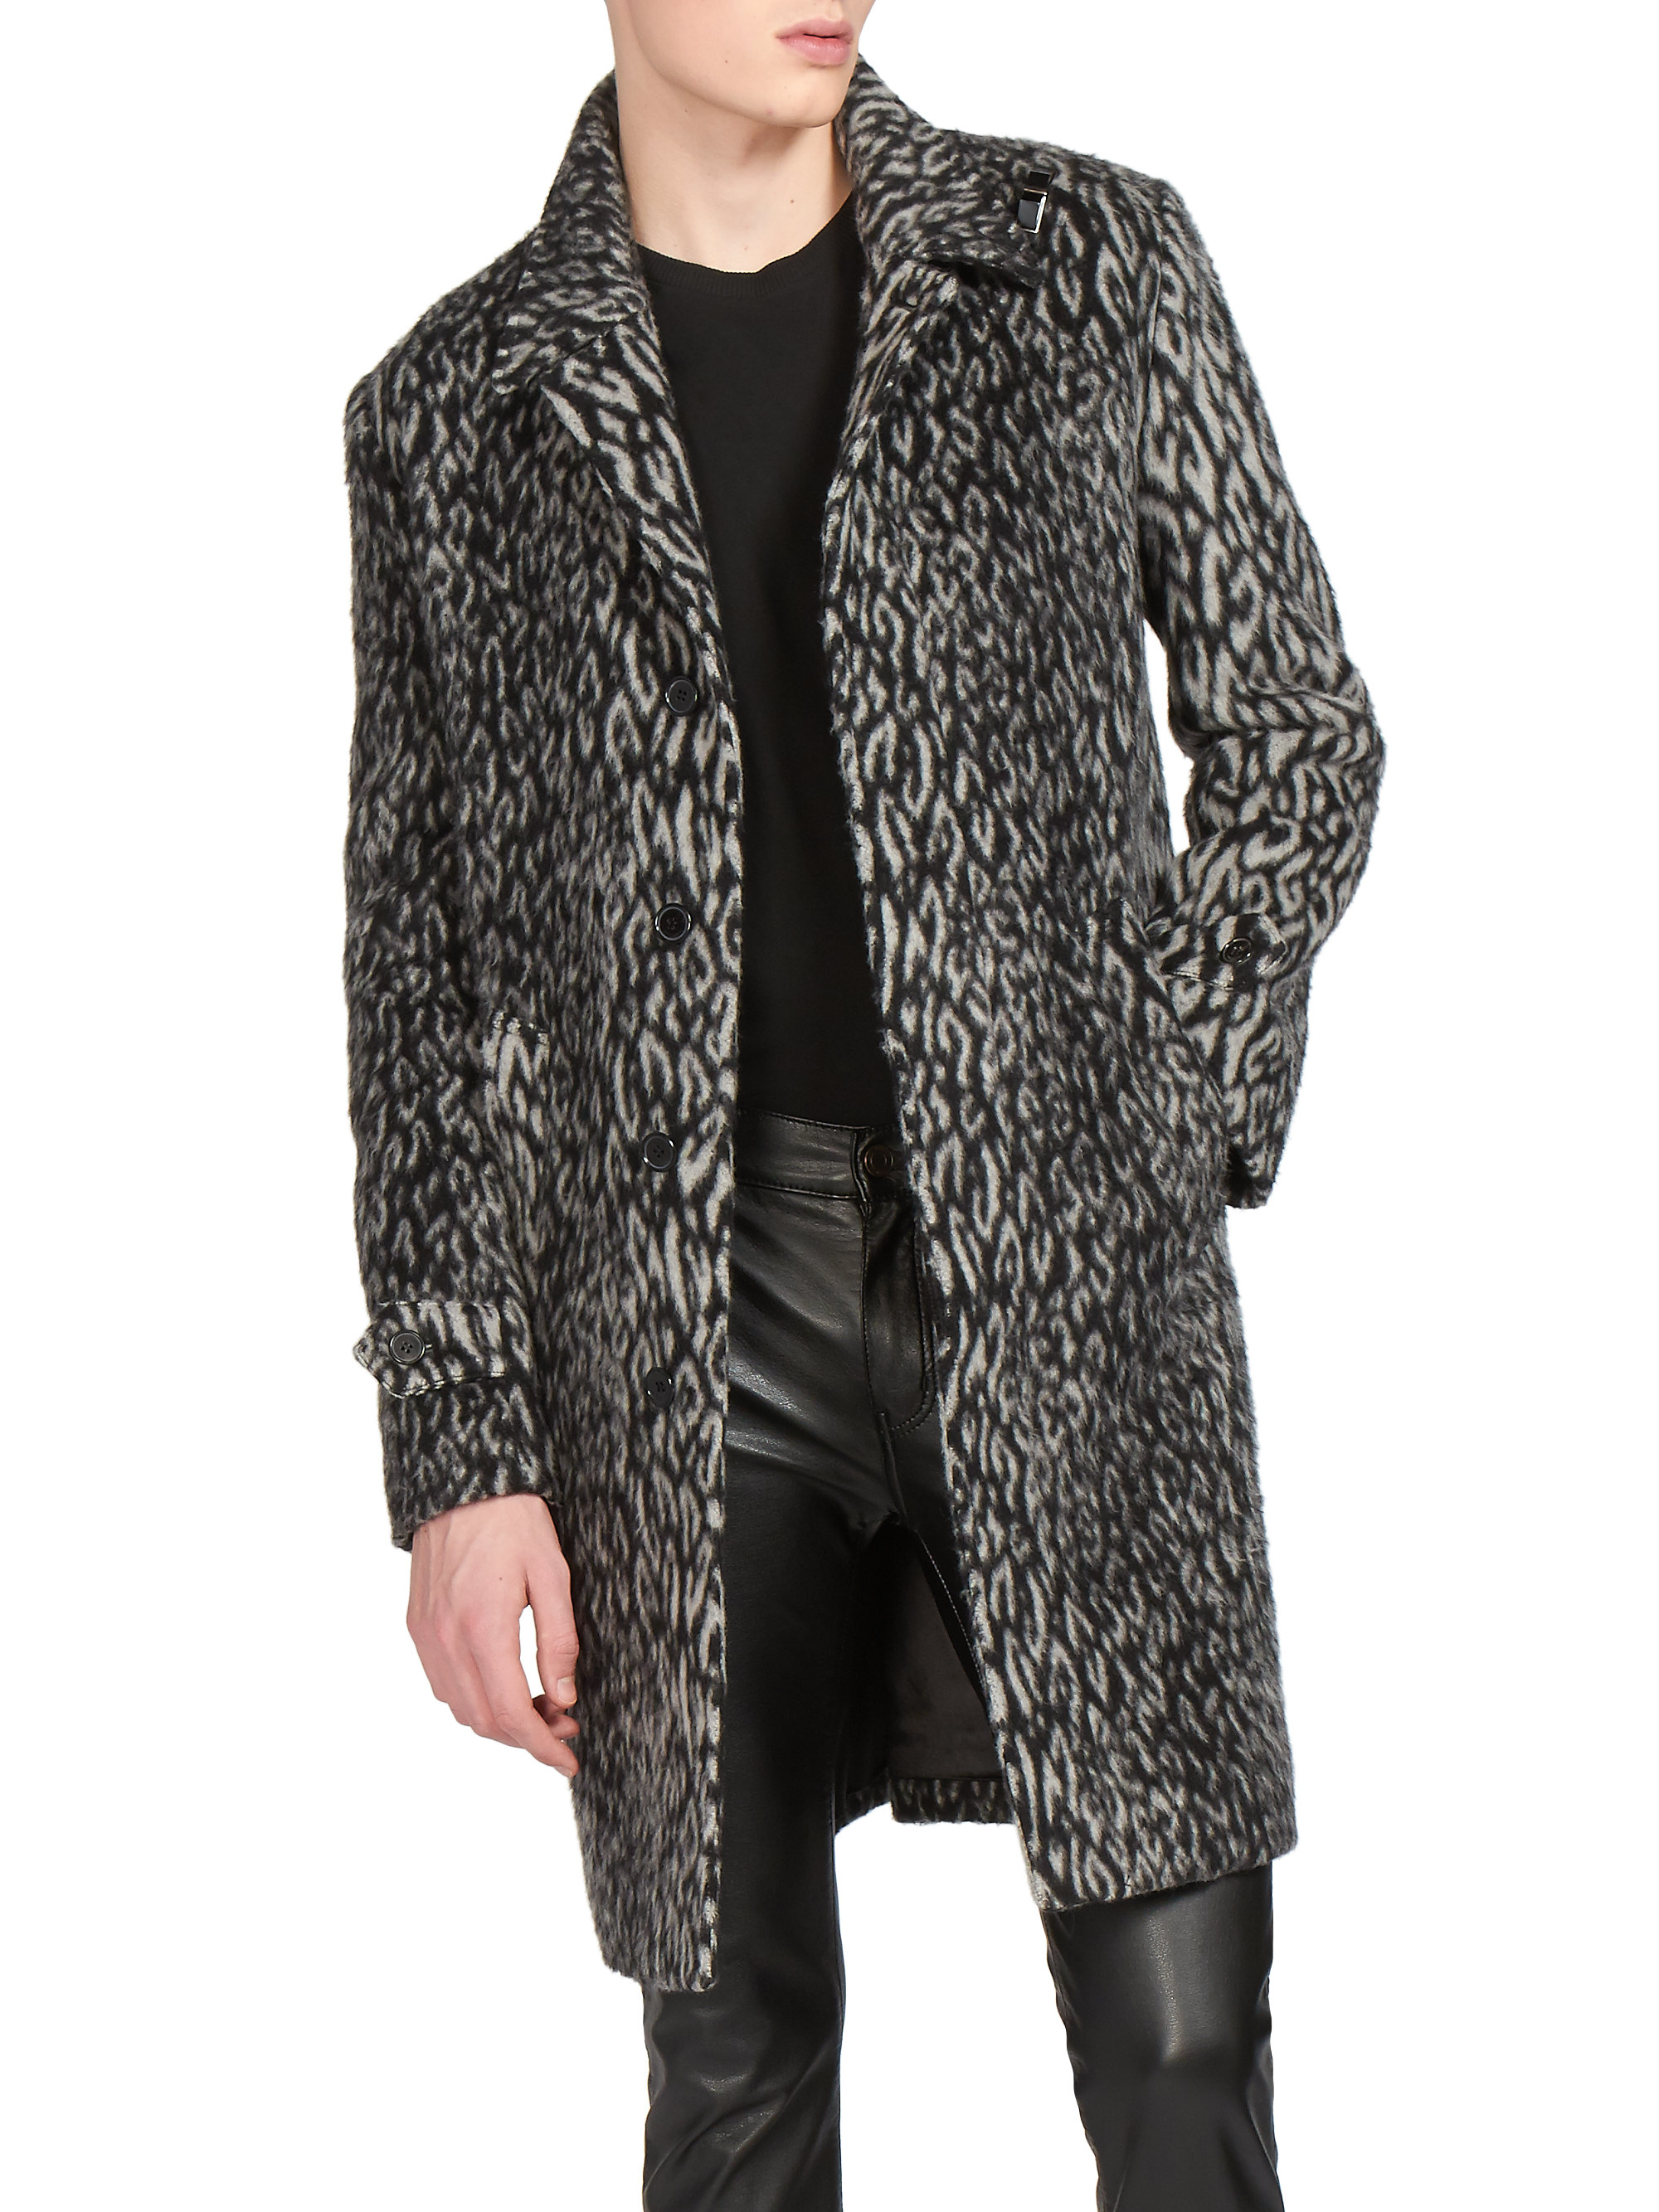 Lyst - Saint Laurent Leopard-print Wool-blend Coat in Gray for Men